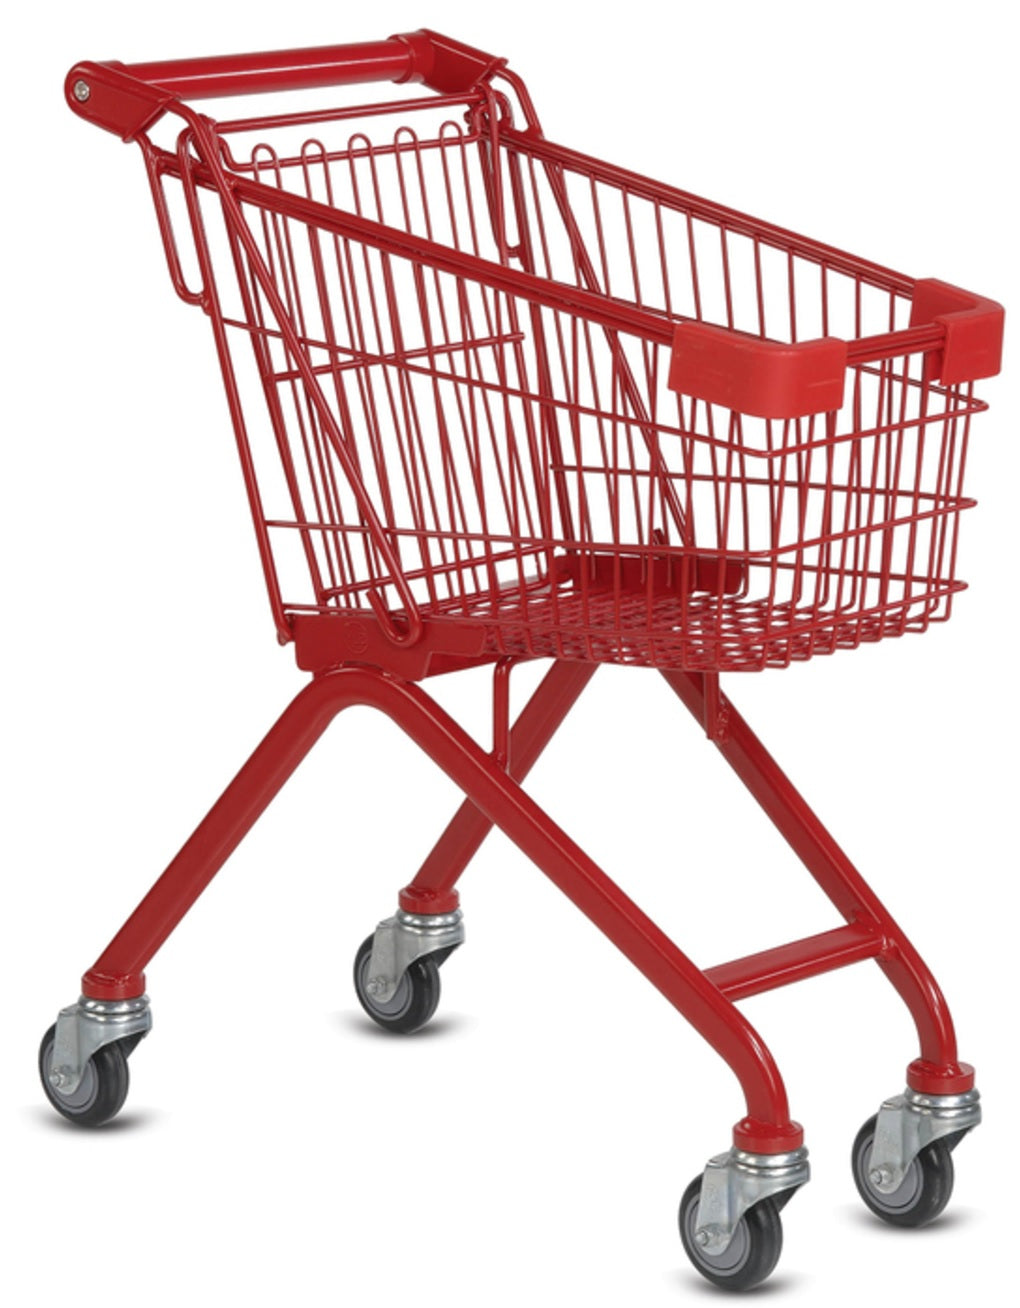 Versacart 102-026 RED BX Kiddy Shopping Cart, Red